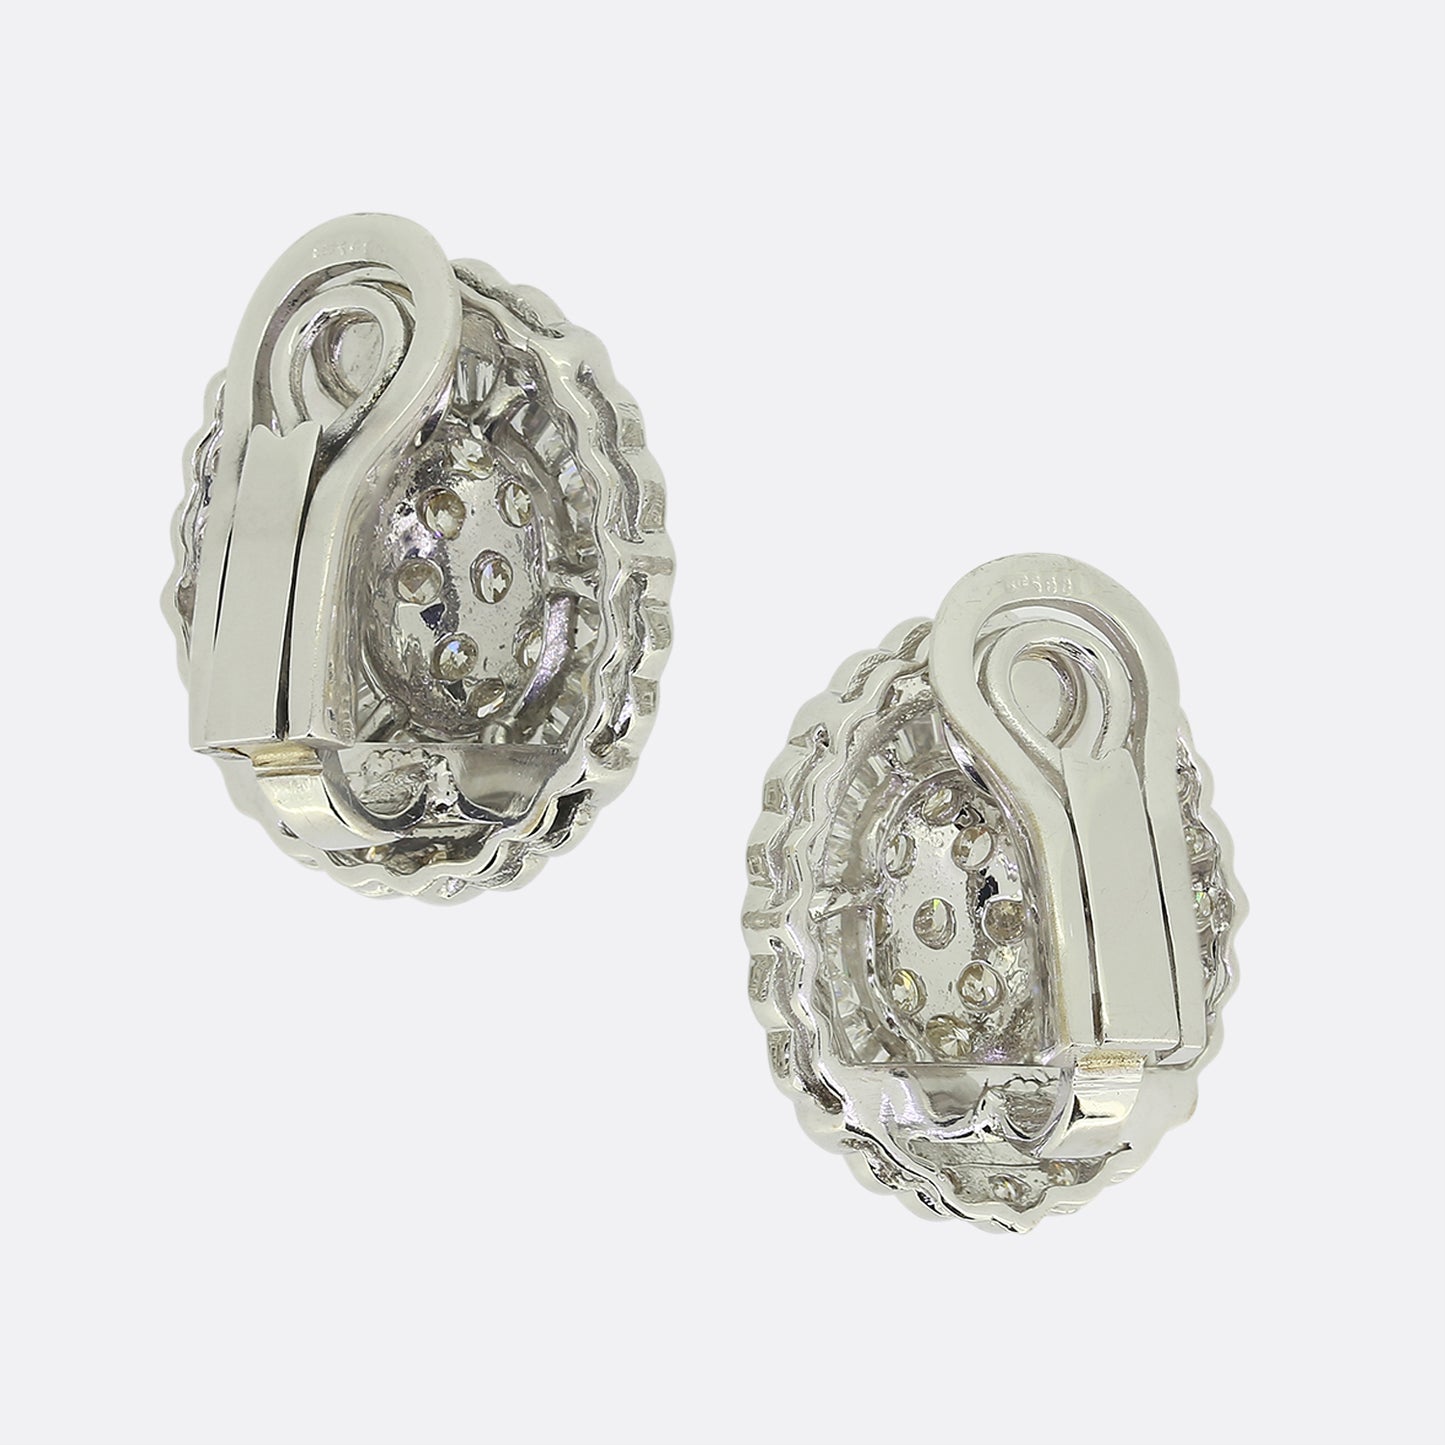 Vintage Multi Diamond Cluster Earrings